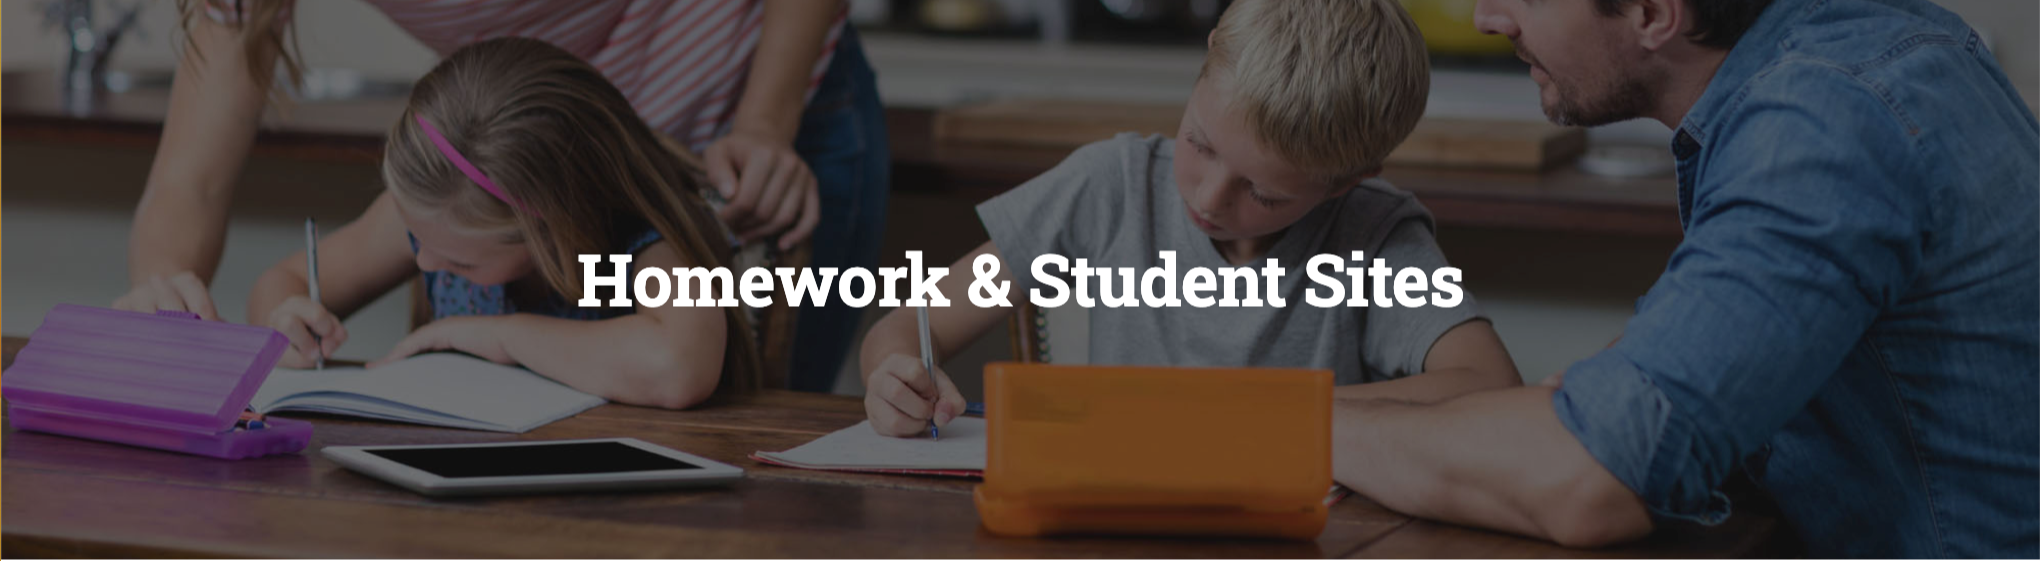 Homework & Student Sites